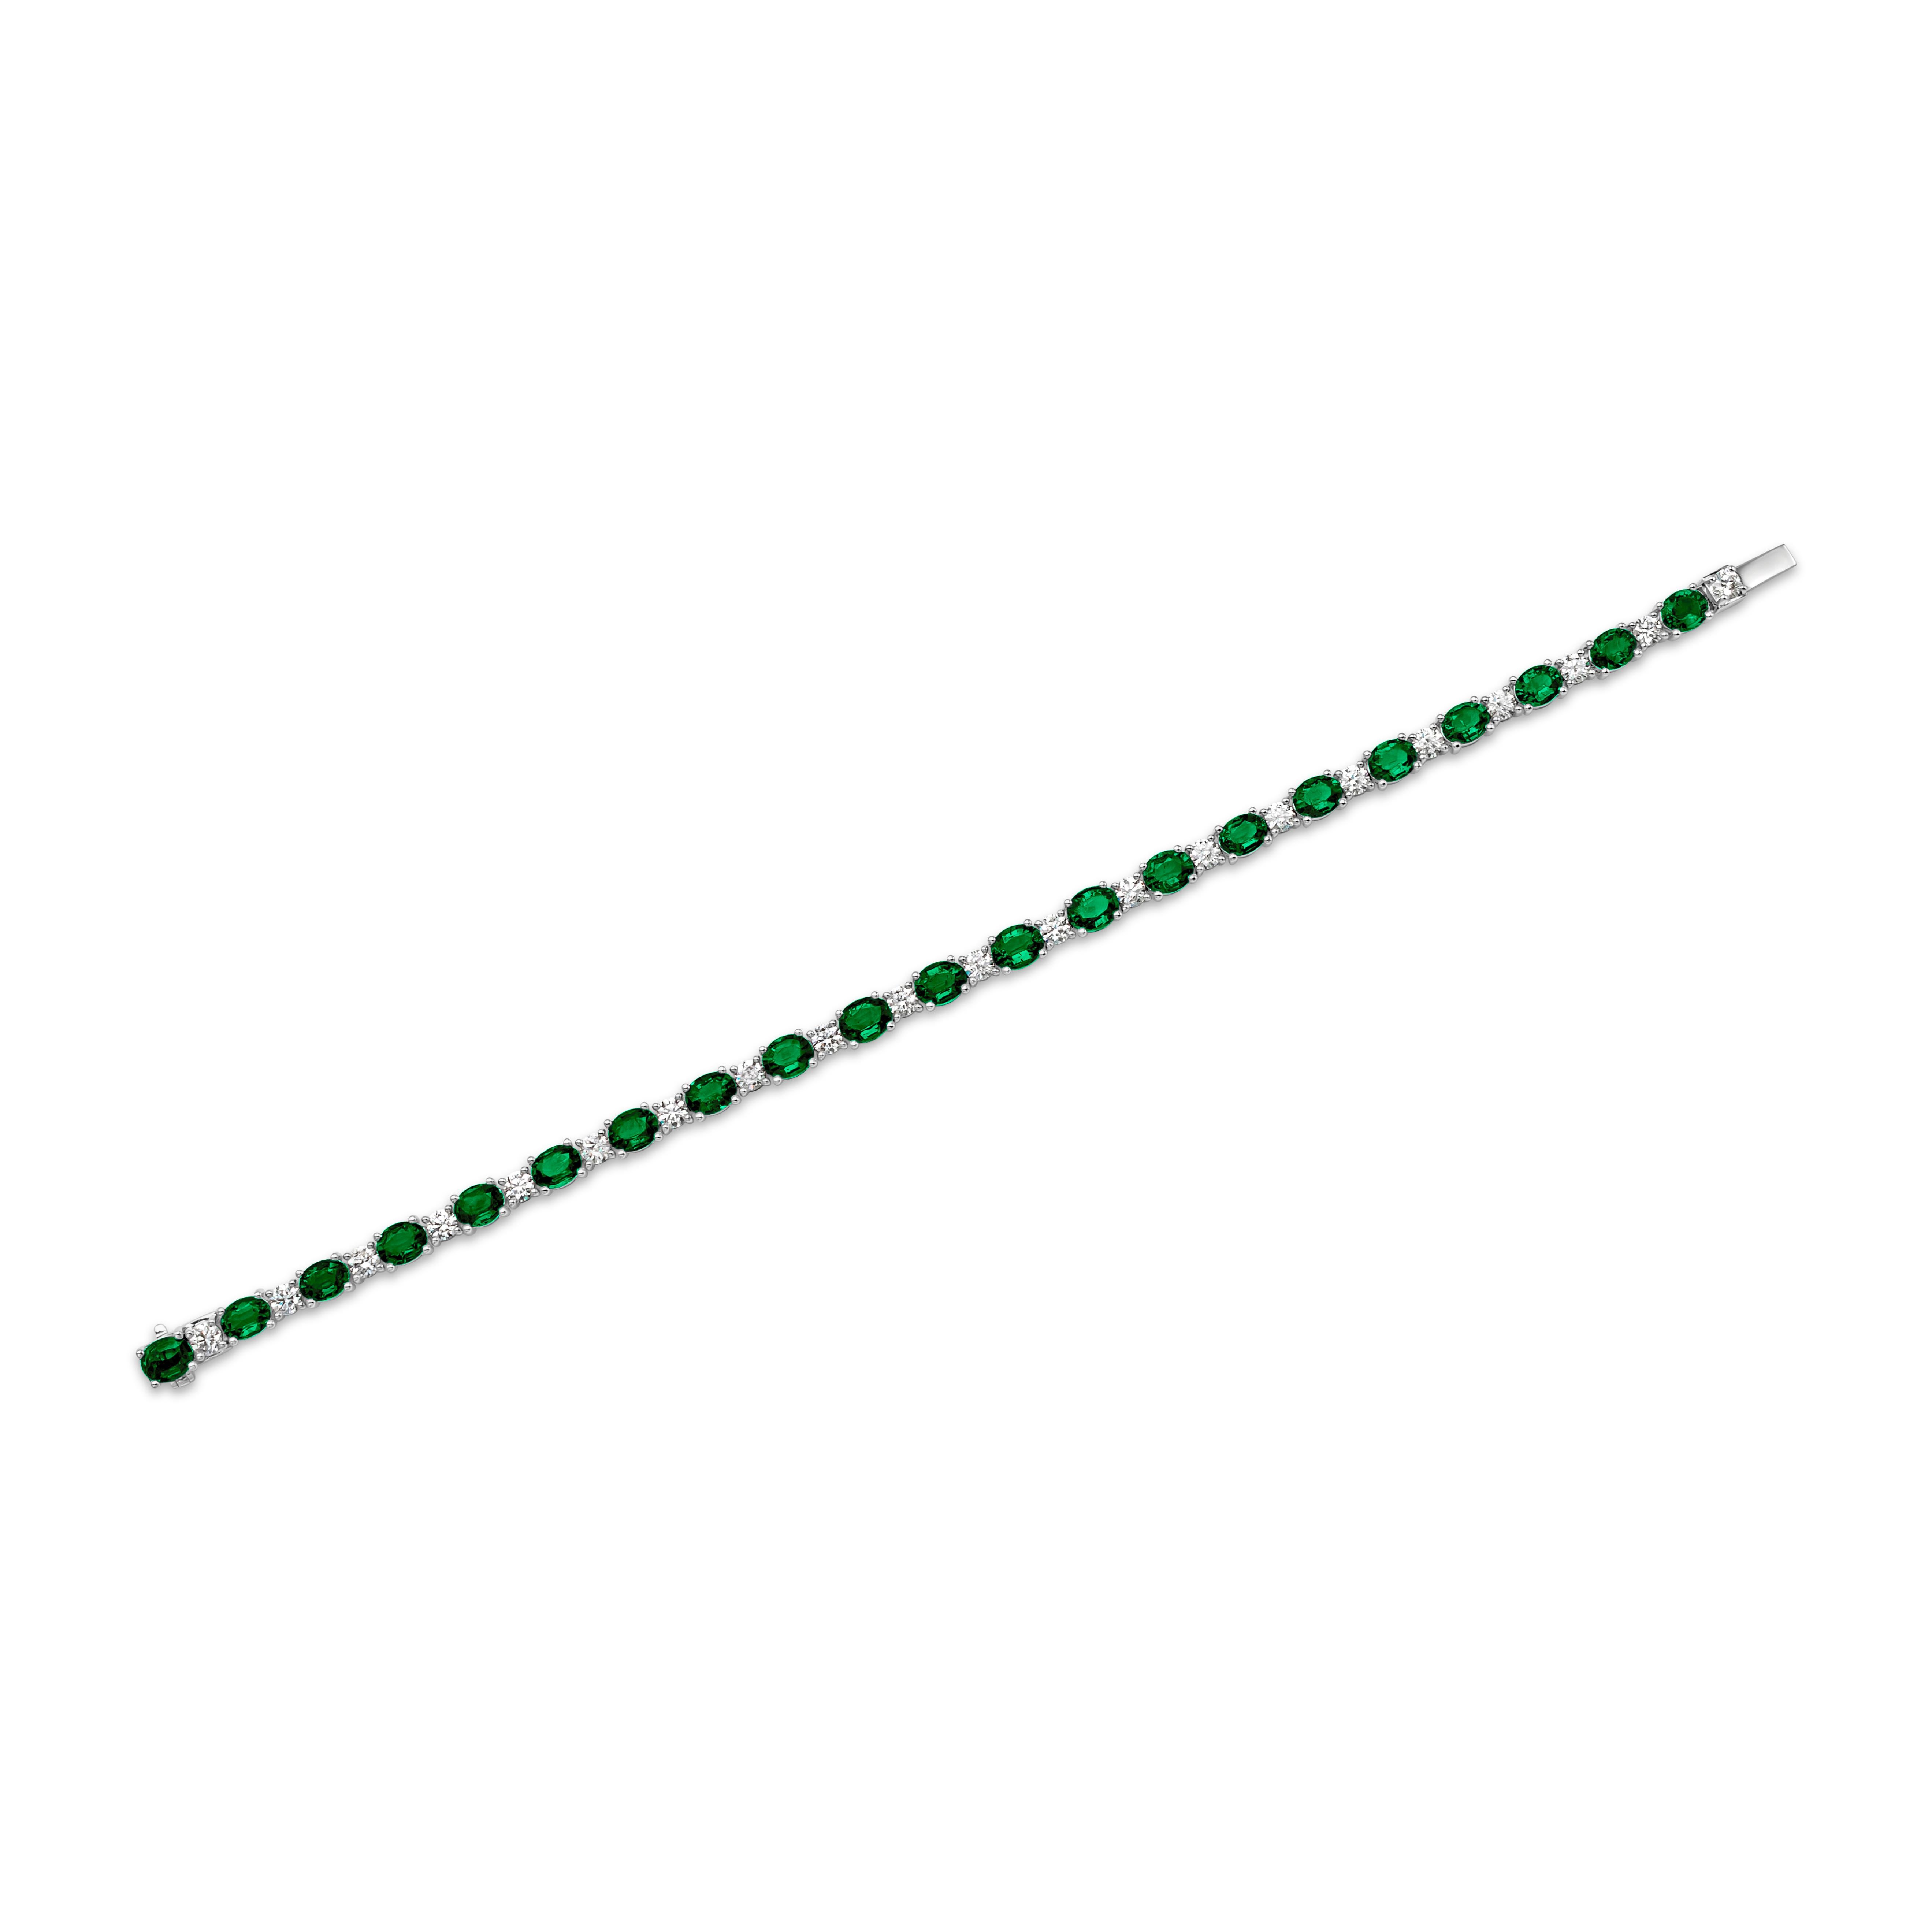 Contemporary Roman Malakov 5.33 Carat Oval Cut Colombian Emerald with Diamond Tennis Bracelet For Sale